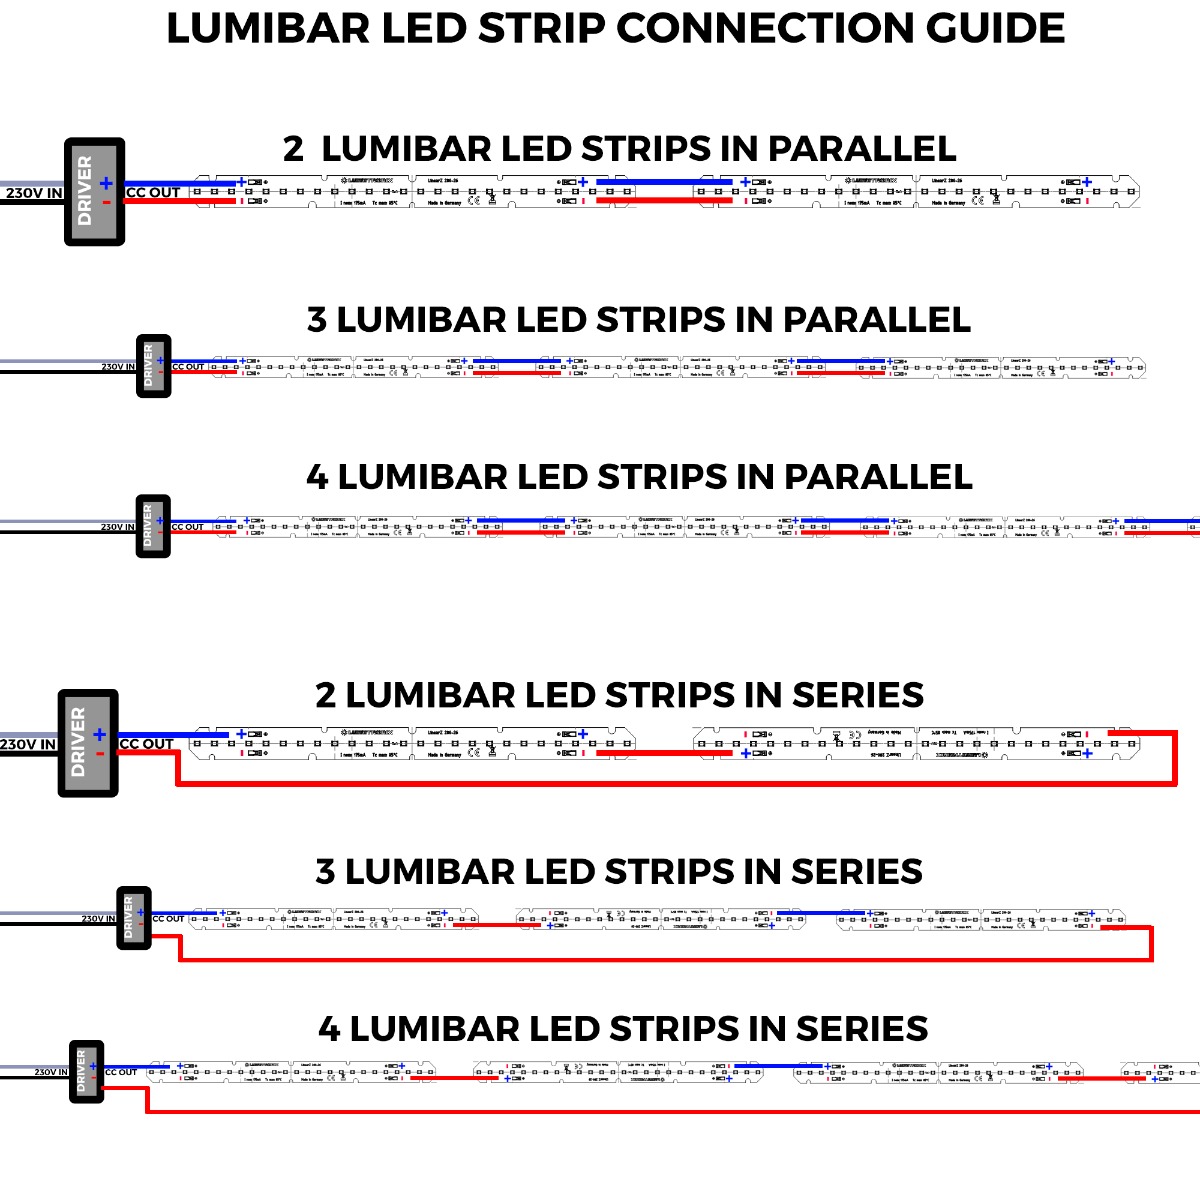 LumiBar-28-3098+ Toshiba-SSC LED Strip Sunlike cu spectru complet CRI98 alb pur 4000K 756lm 350mA 16V 24 LED-uri 28cm modul (2700lm/m 21W/m)